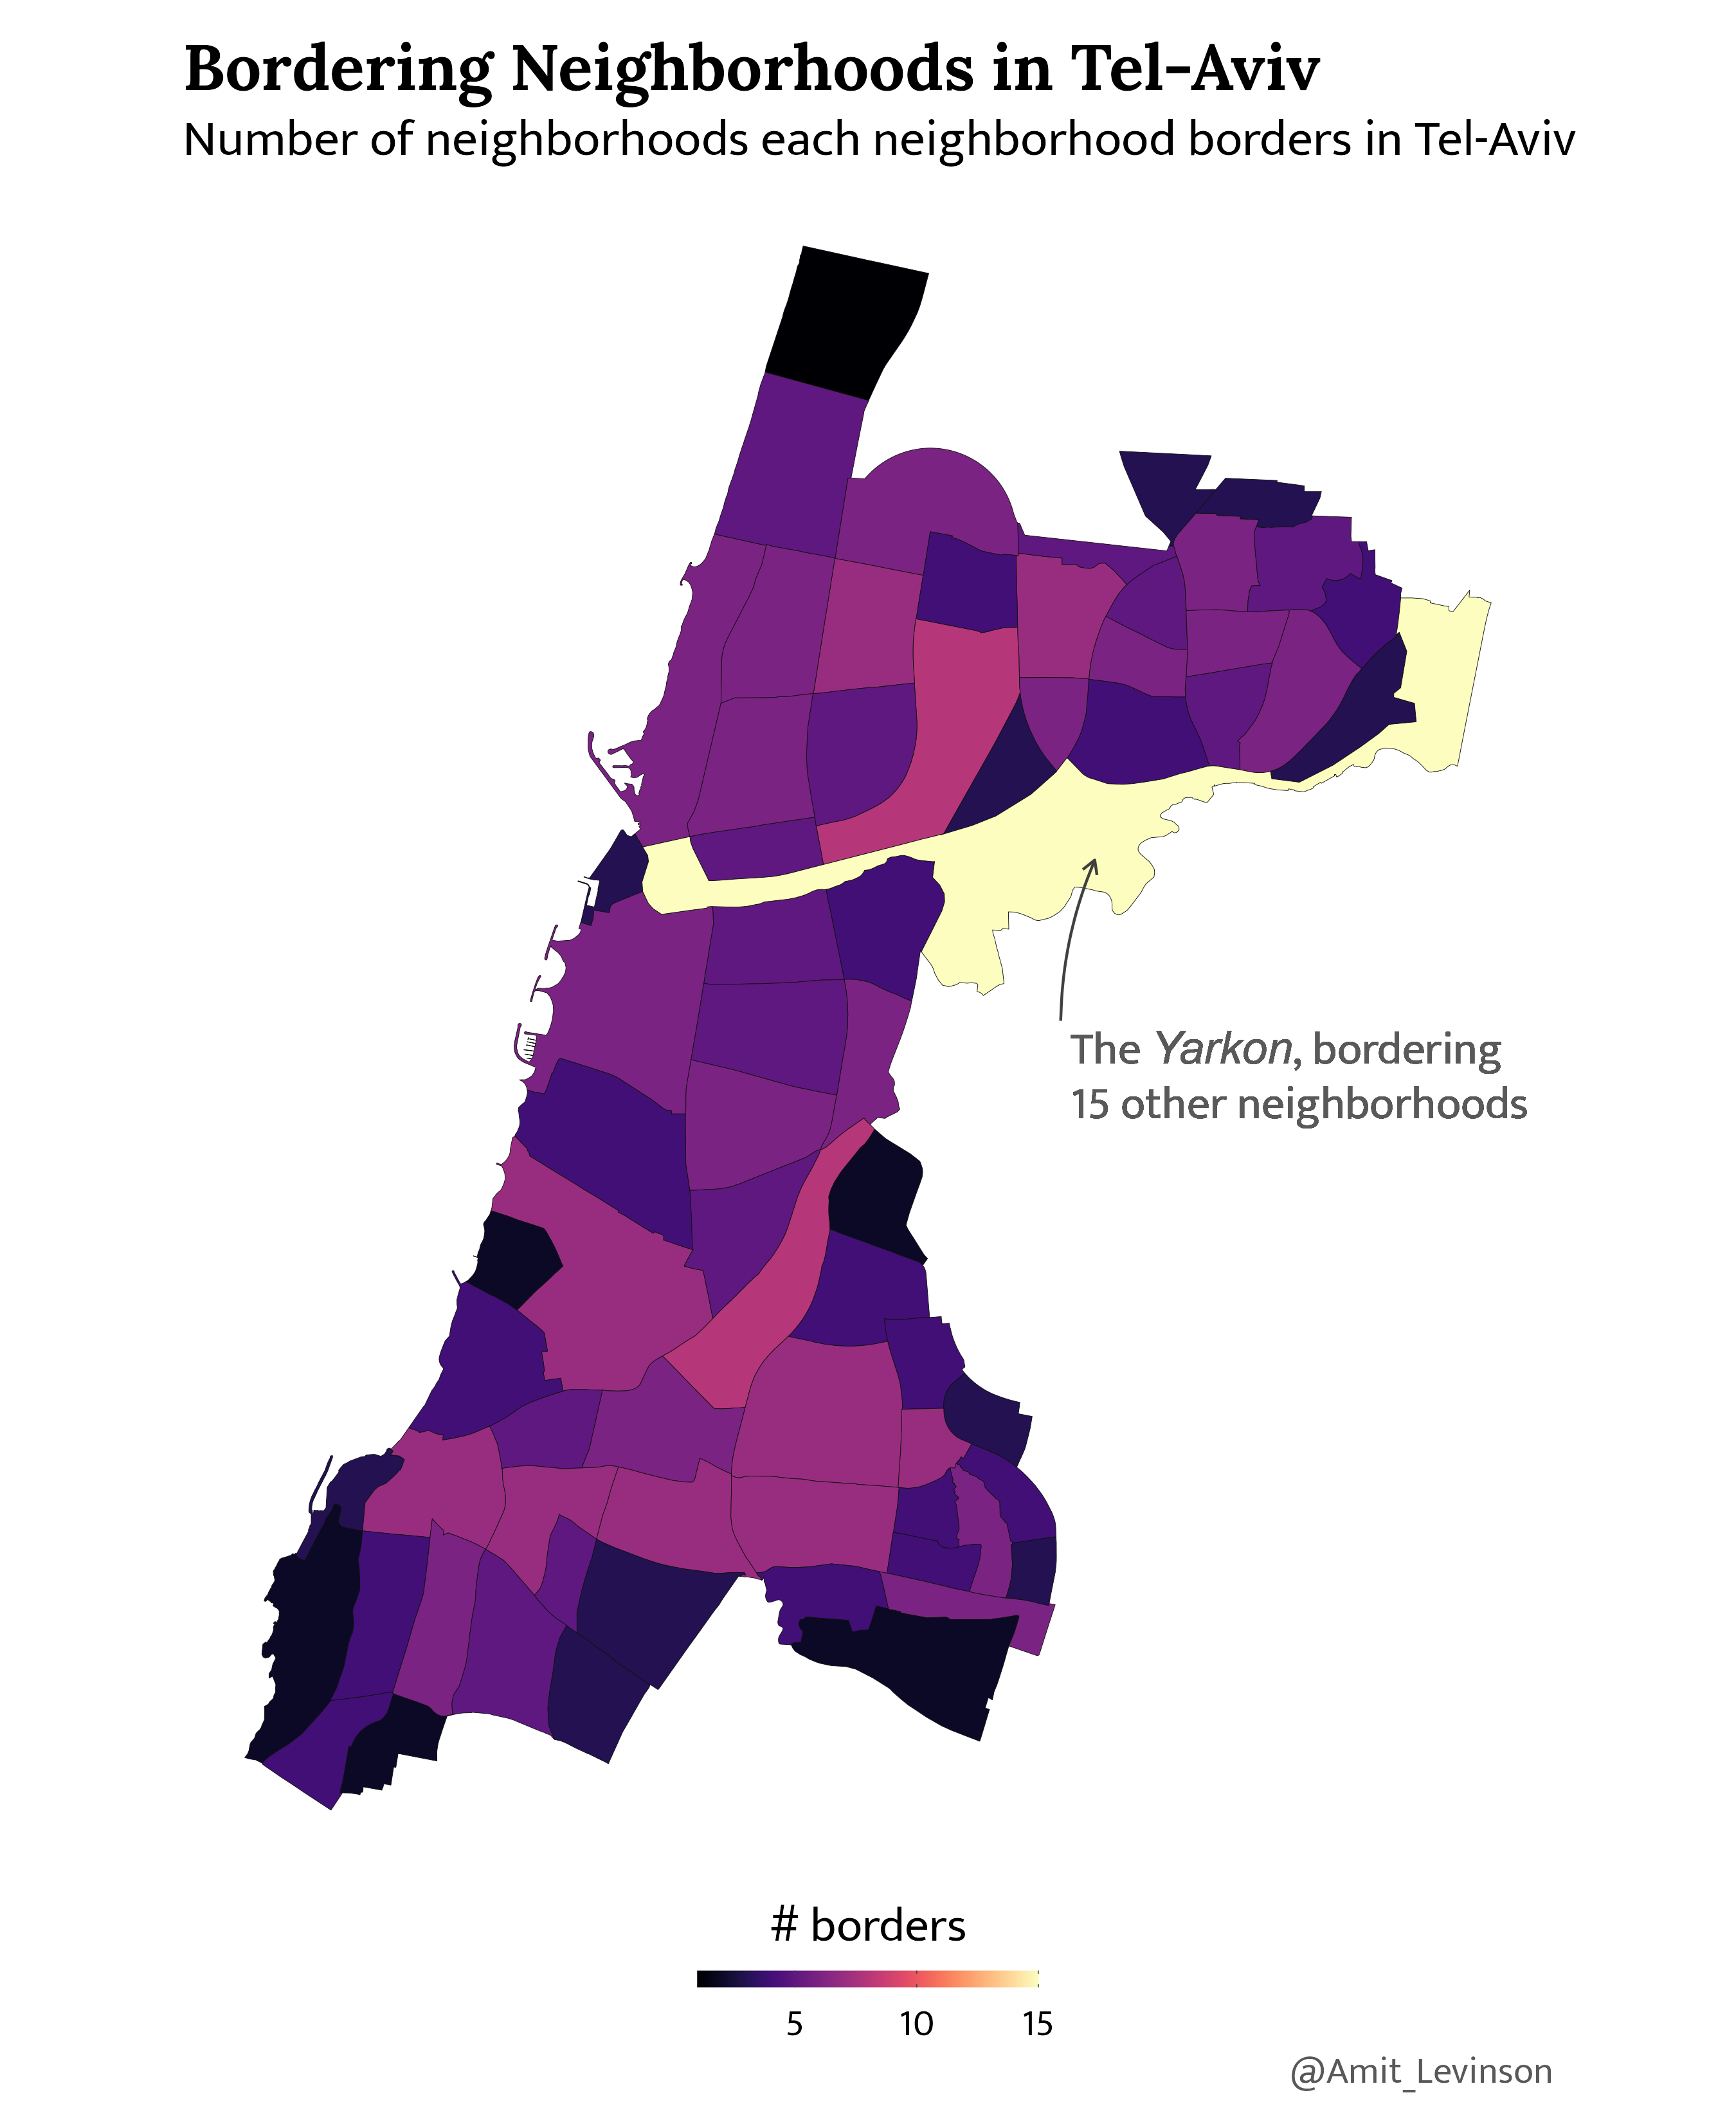 Map of Tel-Aviv neighborhoods with the one bordering the most neighborhood higlighted (The Yarkon)